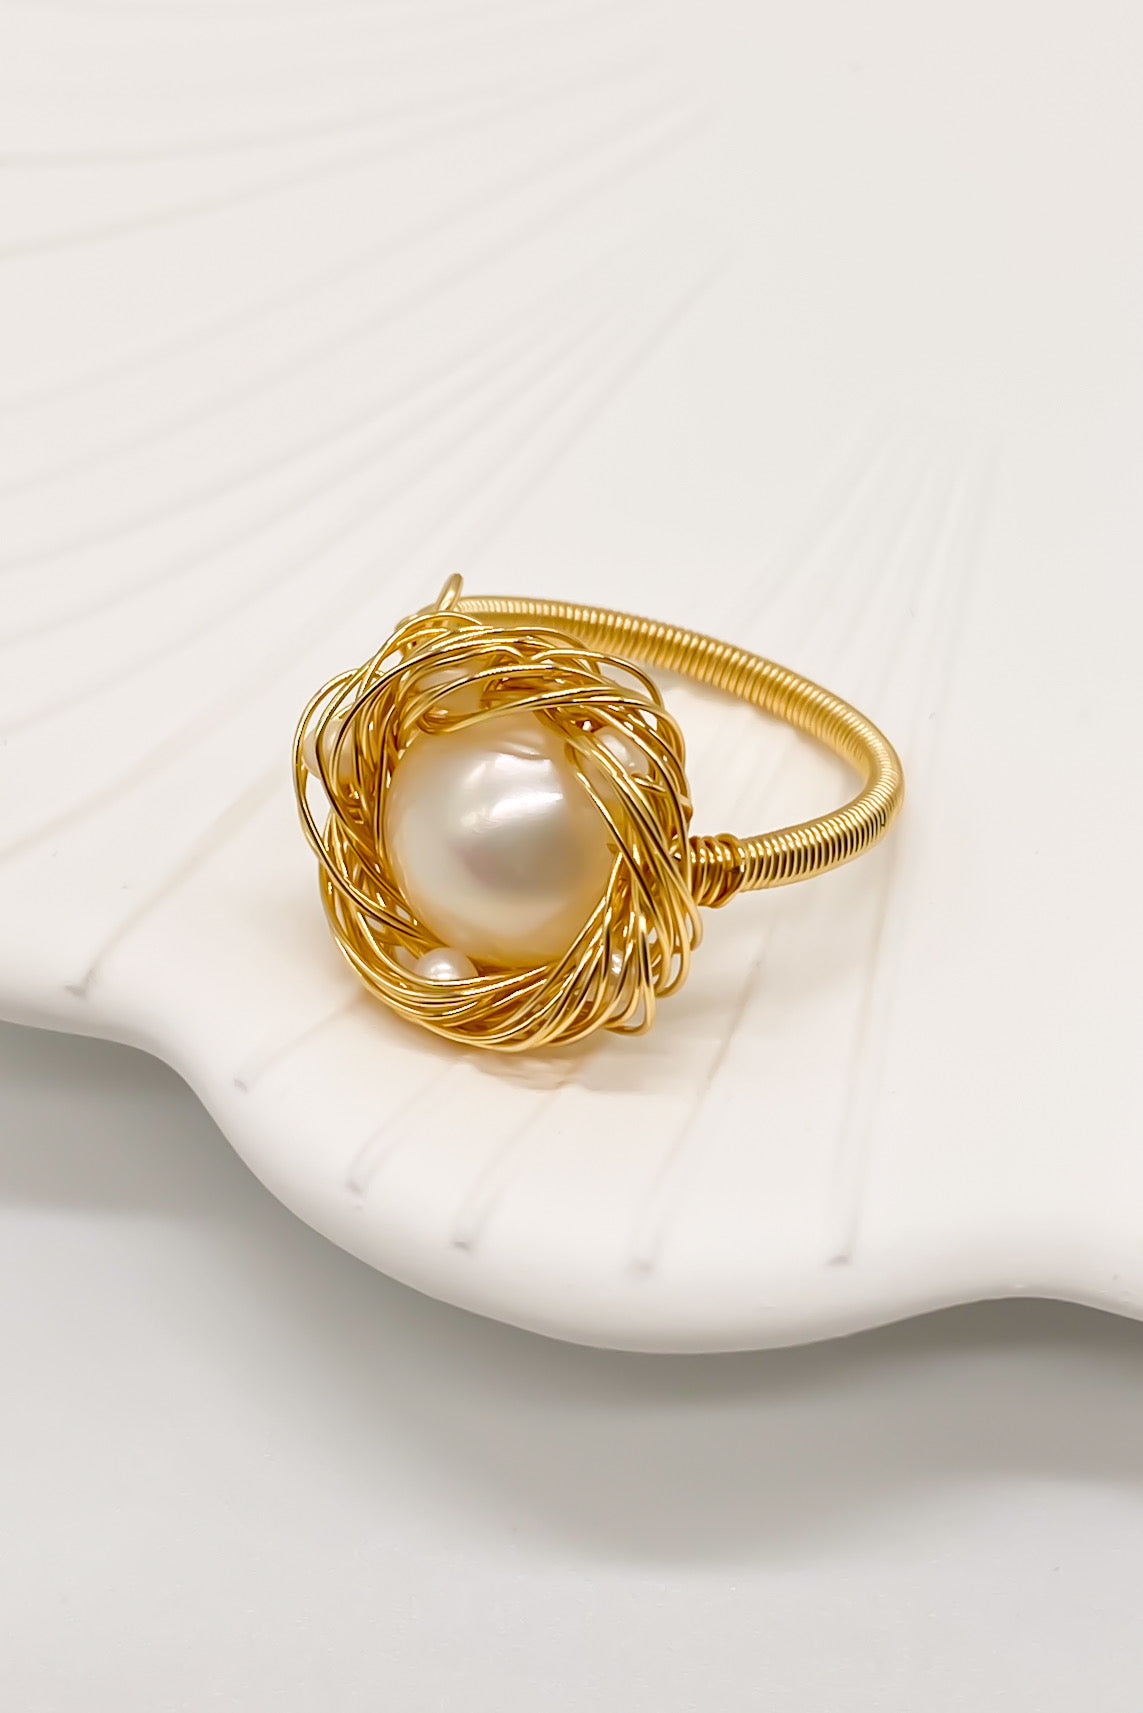 SKYE San Francisco Shop Chic Modern Elegant Classy Women Jewelry French Parisian Minimalist Irene Gold Freshwater Pearl Ring 5